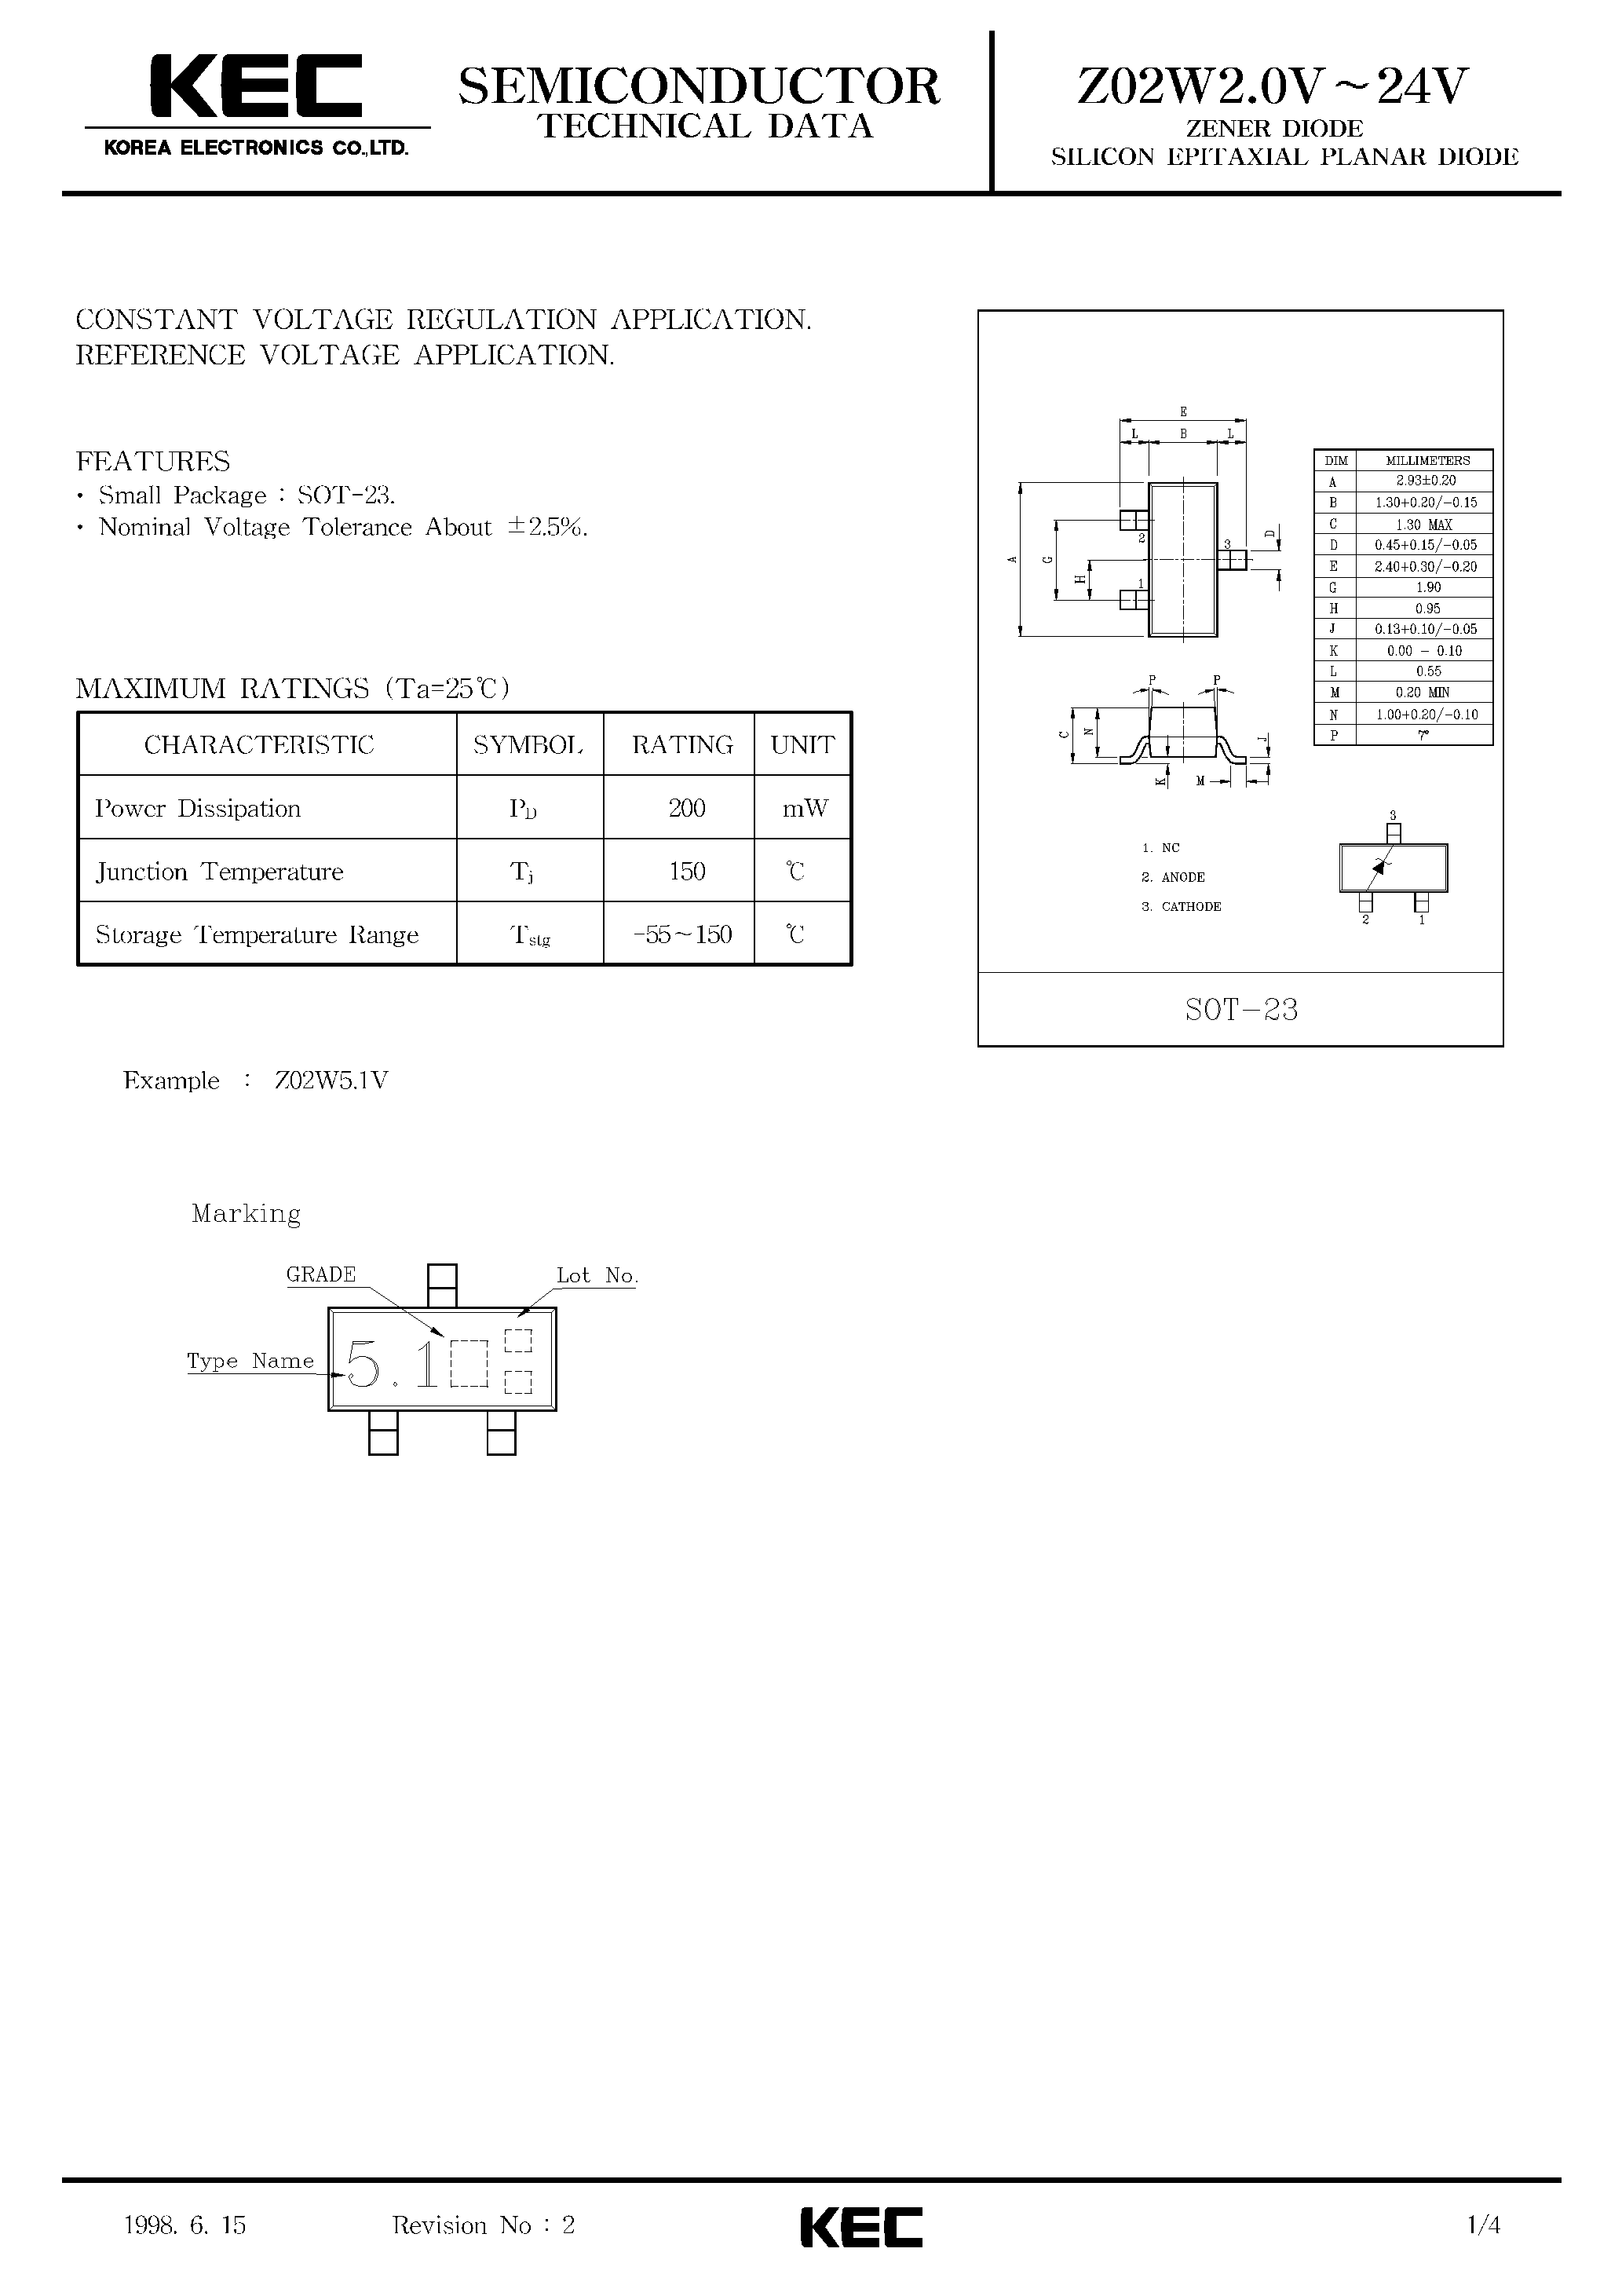 Datasheet Z02W68V - ZENER DIODE SILICON EPITAXIAL PLANAR DIODE (CONSTANT VOLTAGE REGULATION/ REFERENCE VOLTAGE) page 1